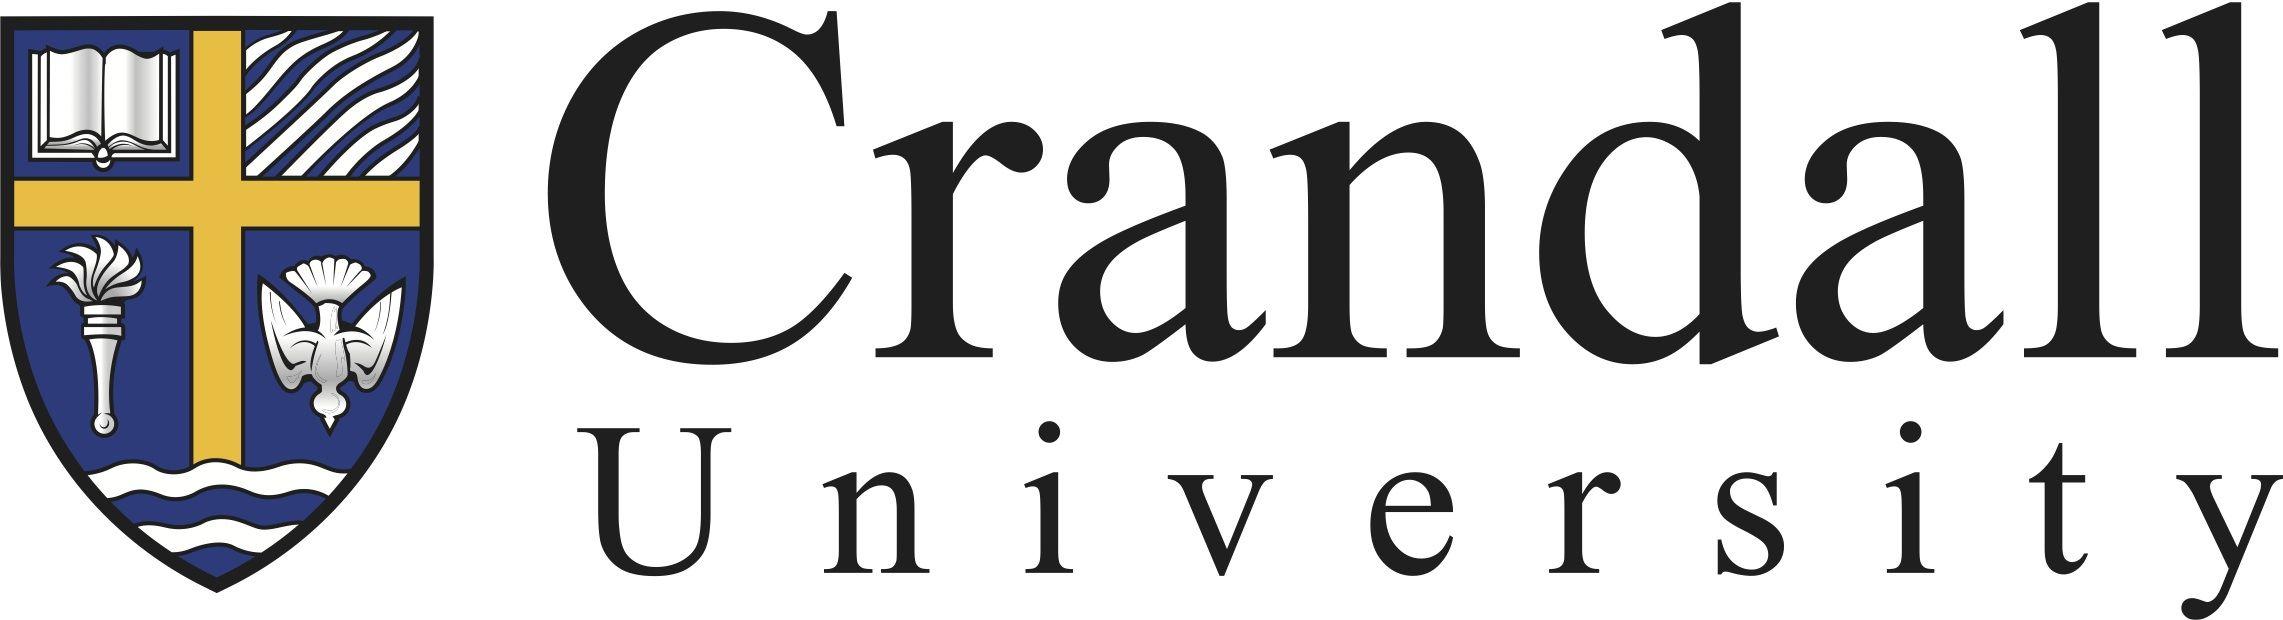 Crandall Logo - Crandall University - A Proud Tradition of Academic Excellence & Faith